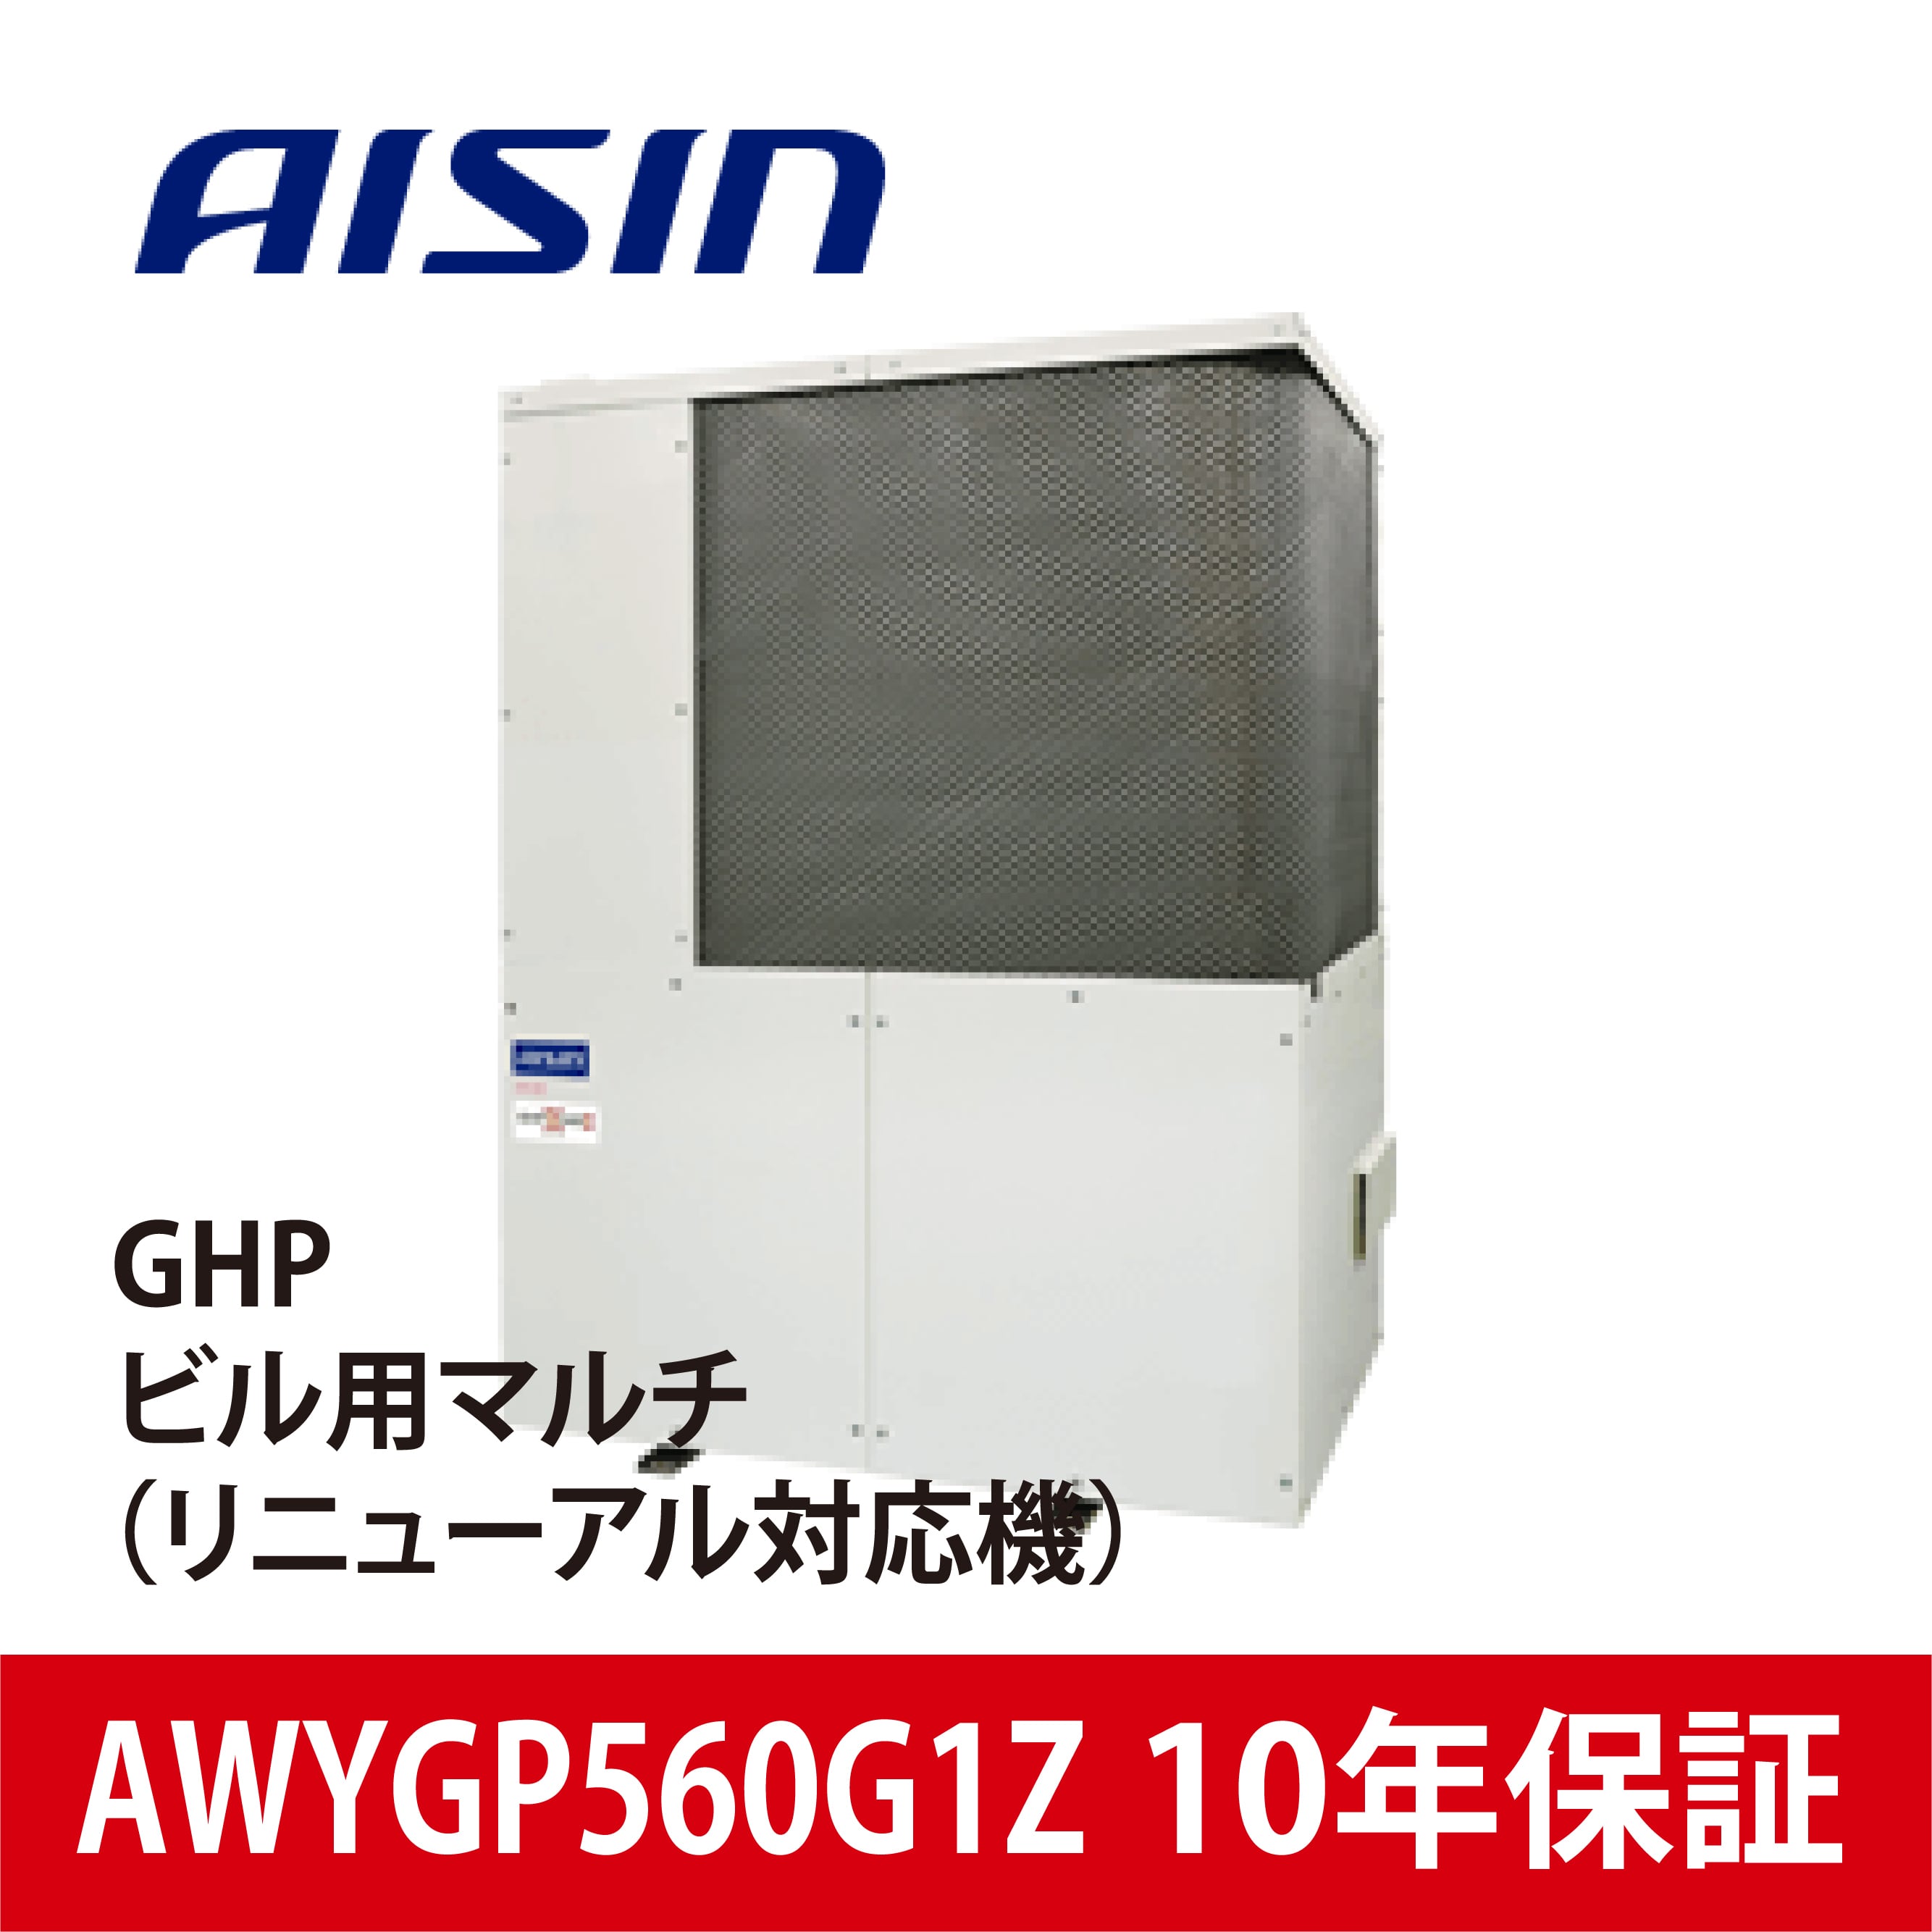 AWYGP560G1Z【AISIN】GHPビル用マルチ（リニューアル対応機）